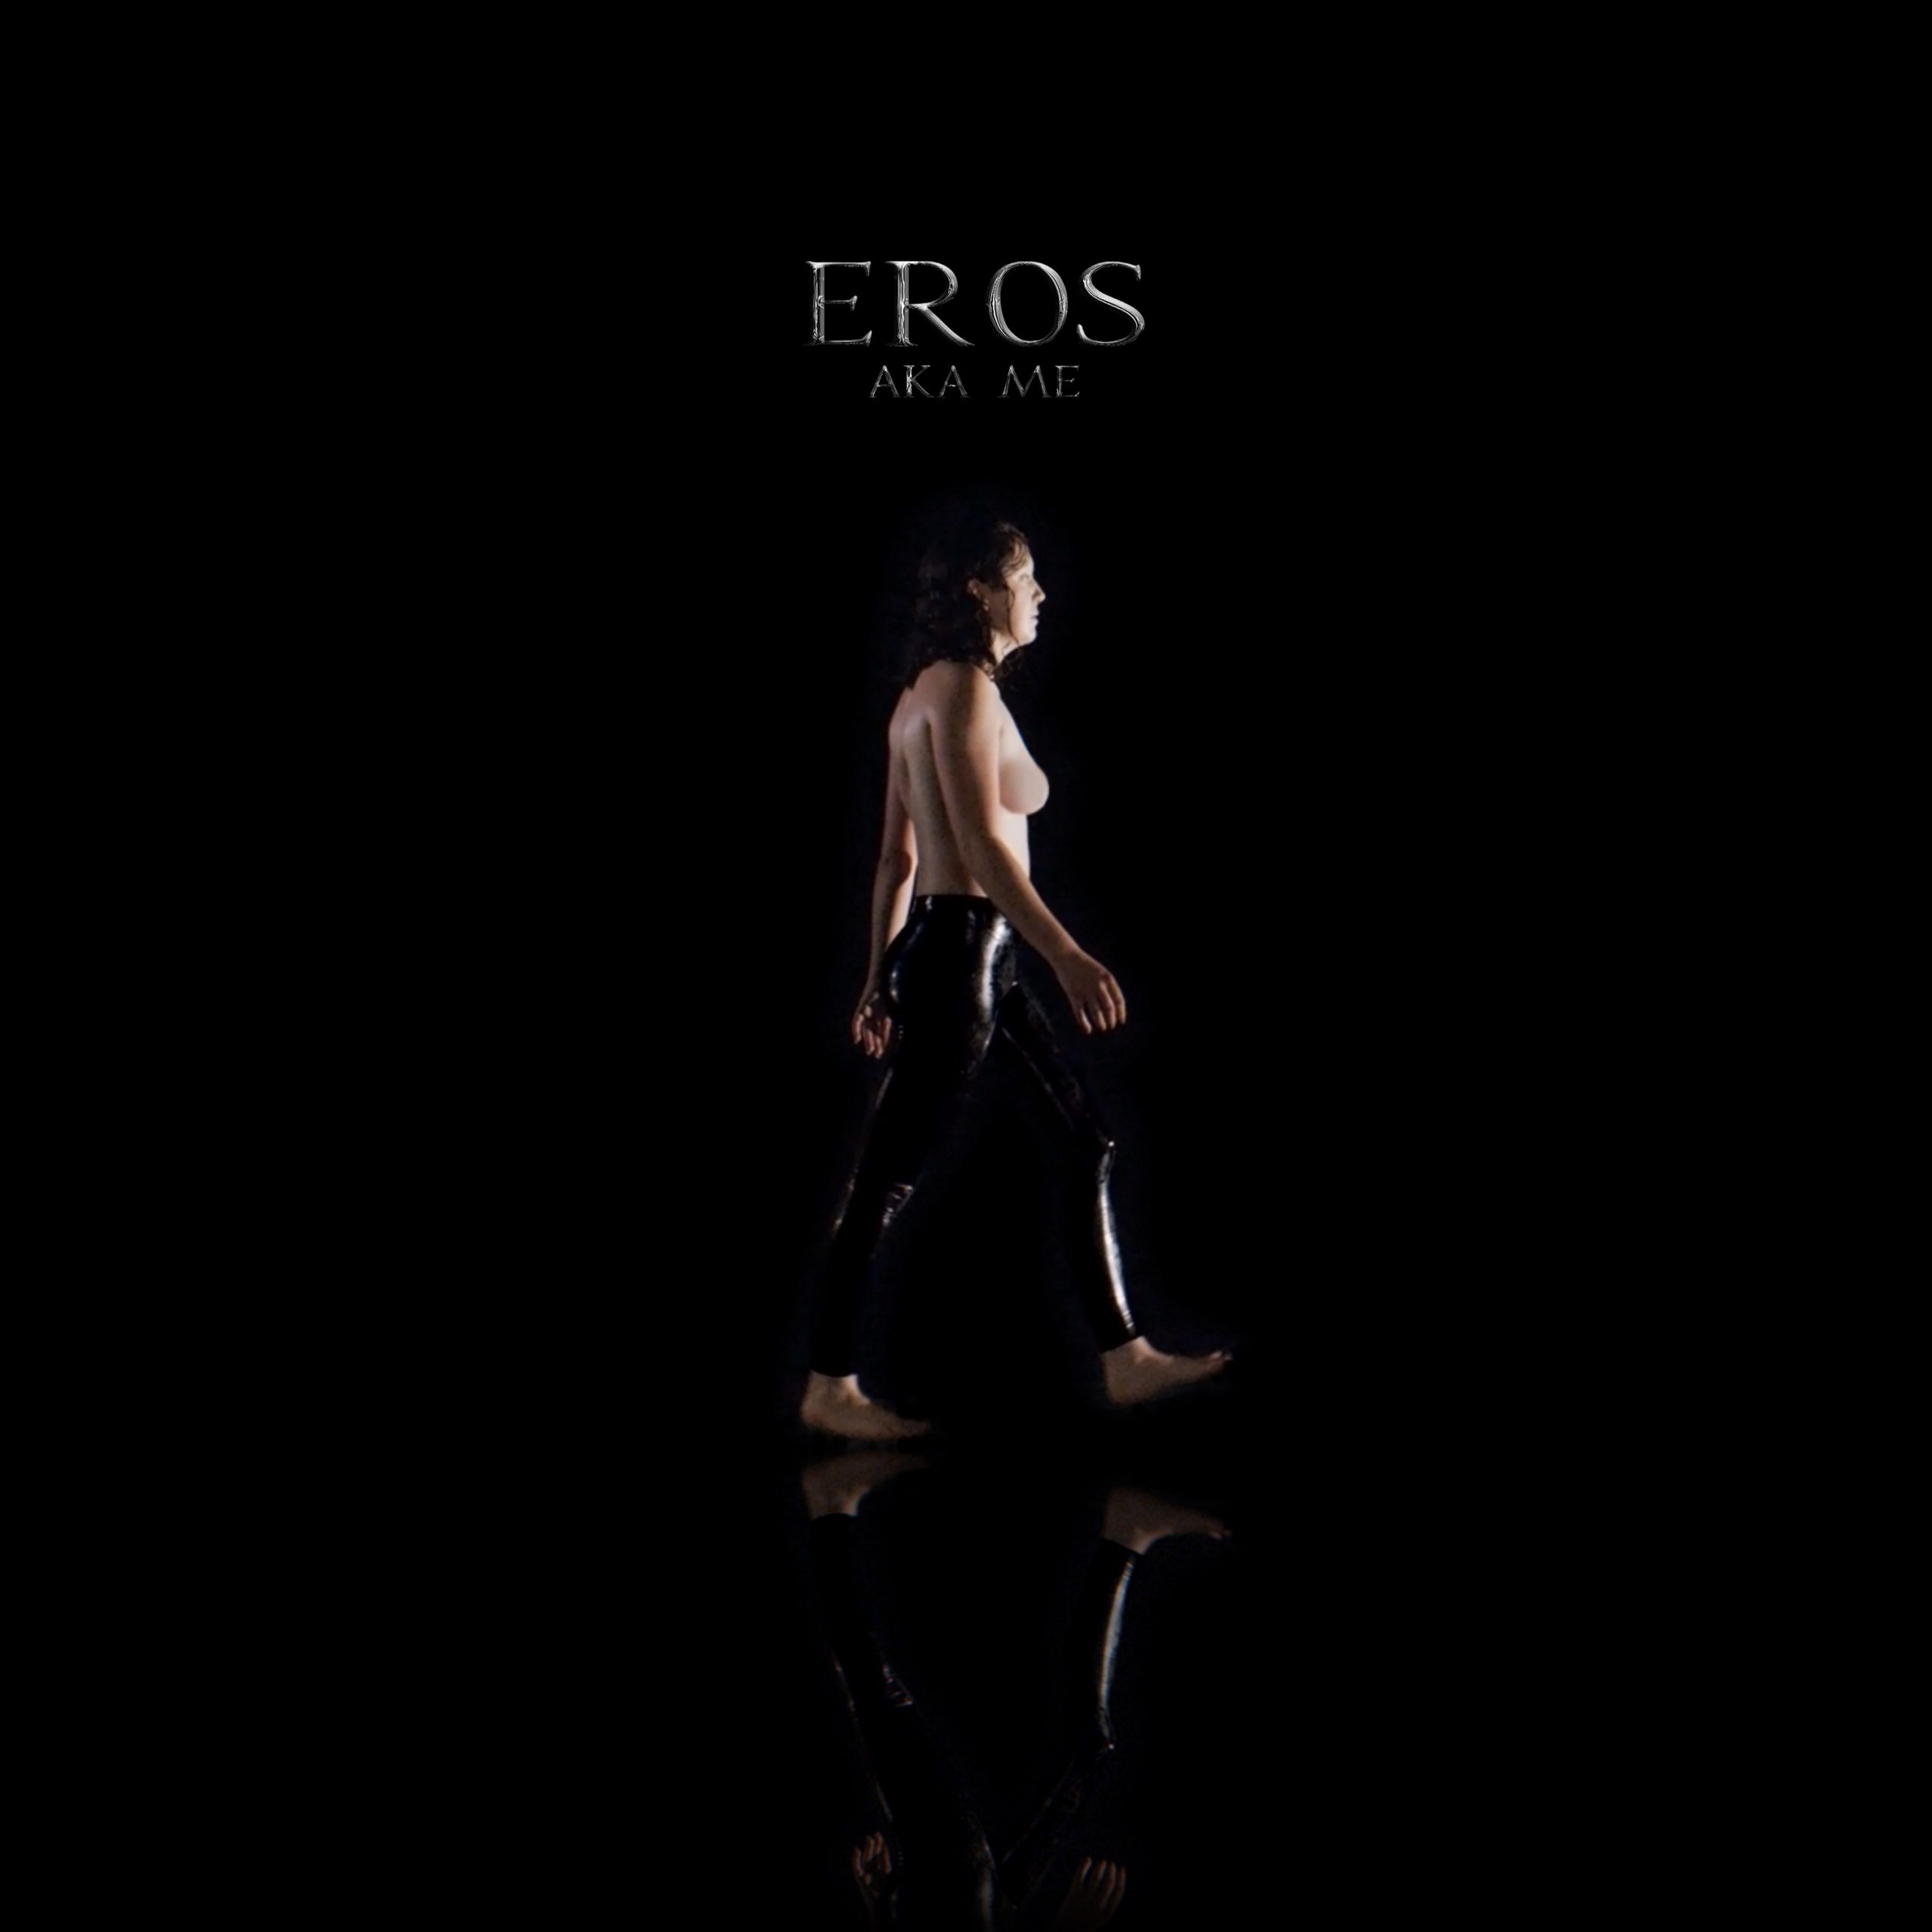 Exclusive Premiere: AKA Me’s “Eros”